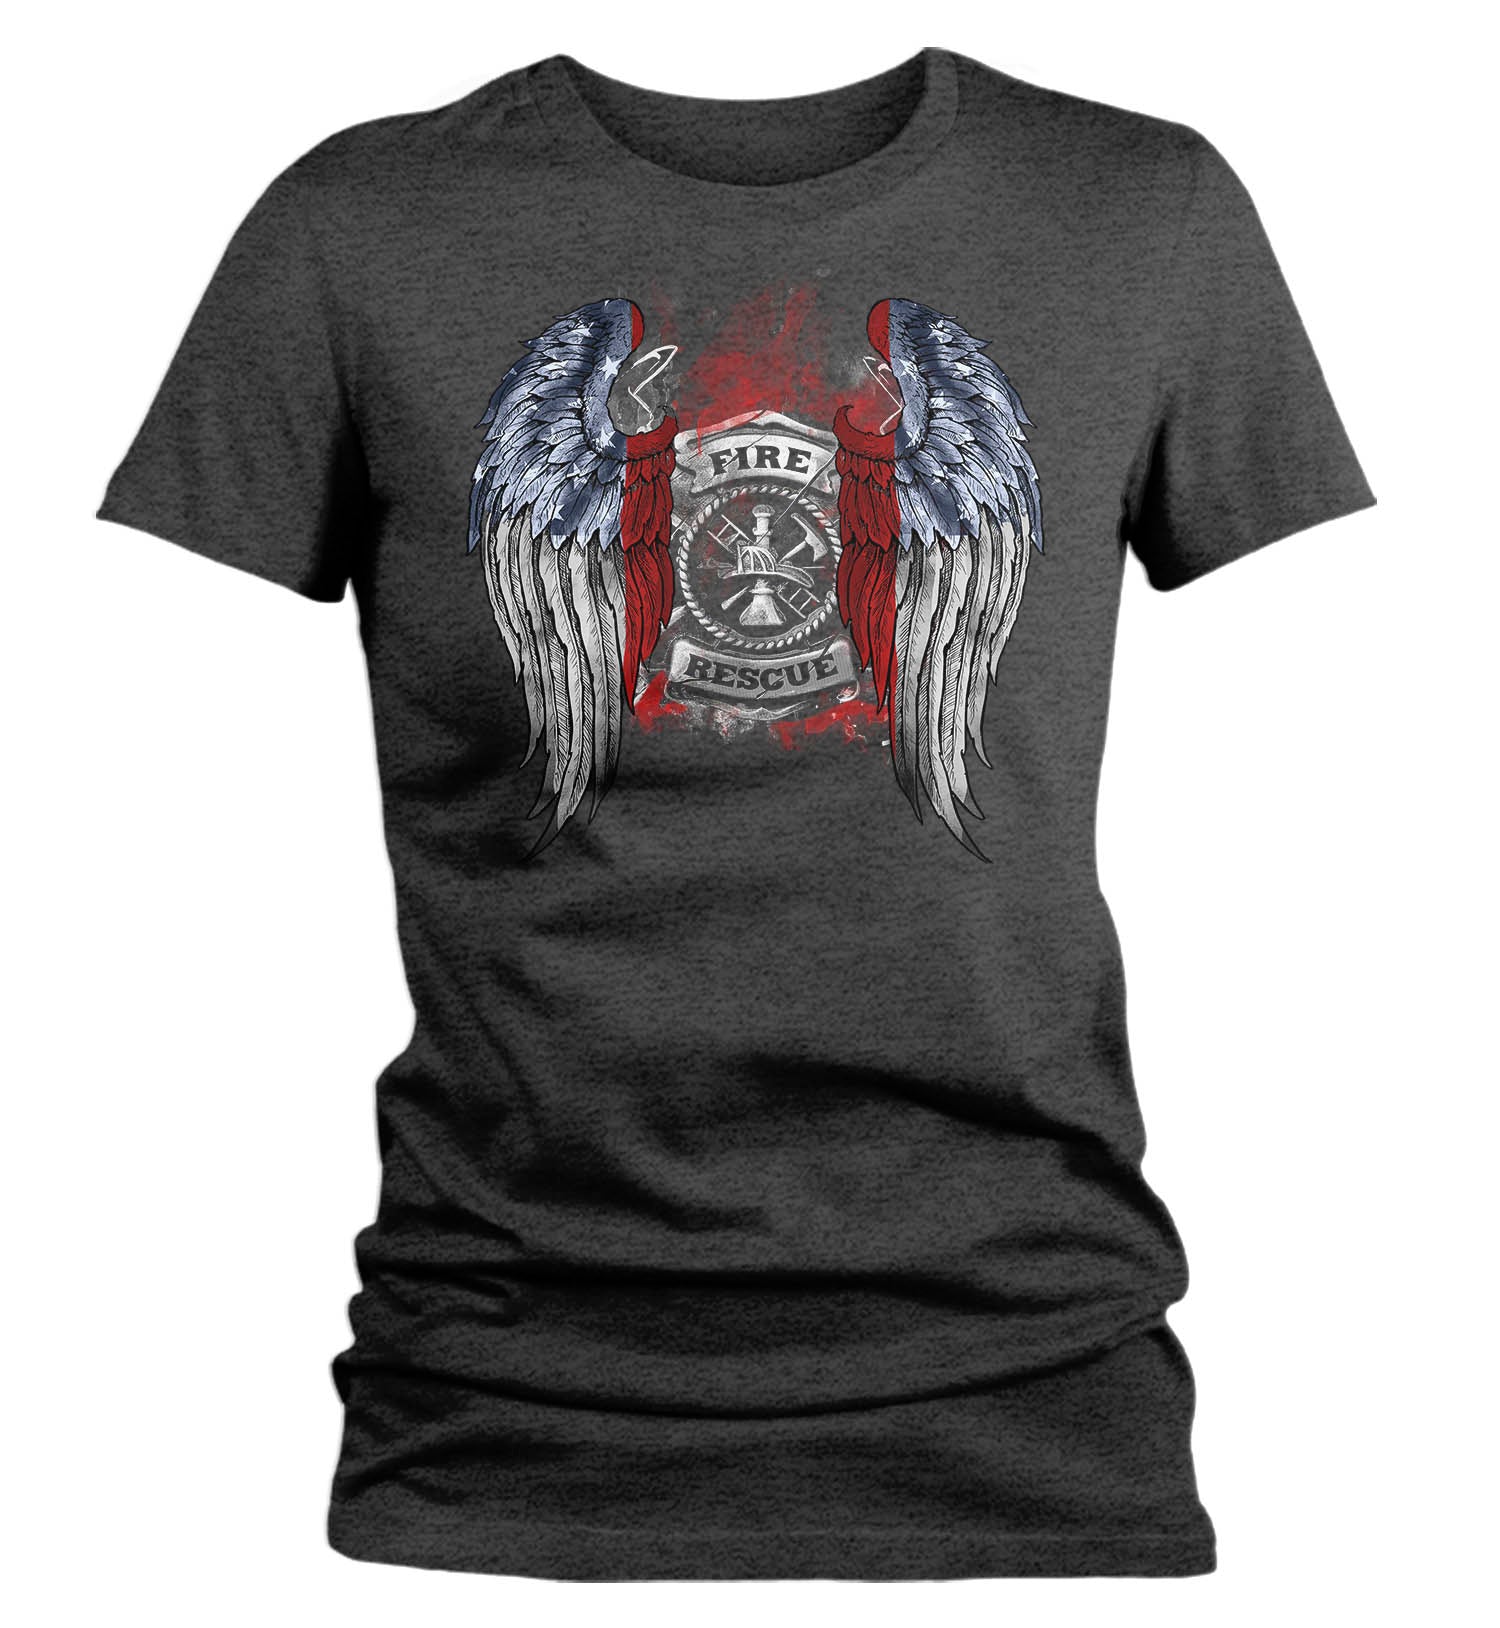 Women's Firefighter Shirt Cool Angel Wings T Shirt Blessed G